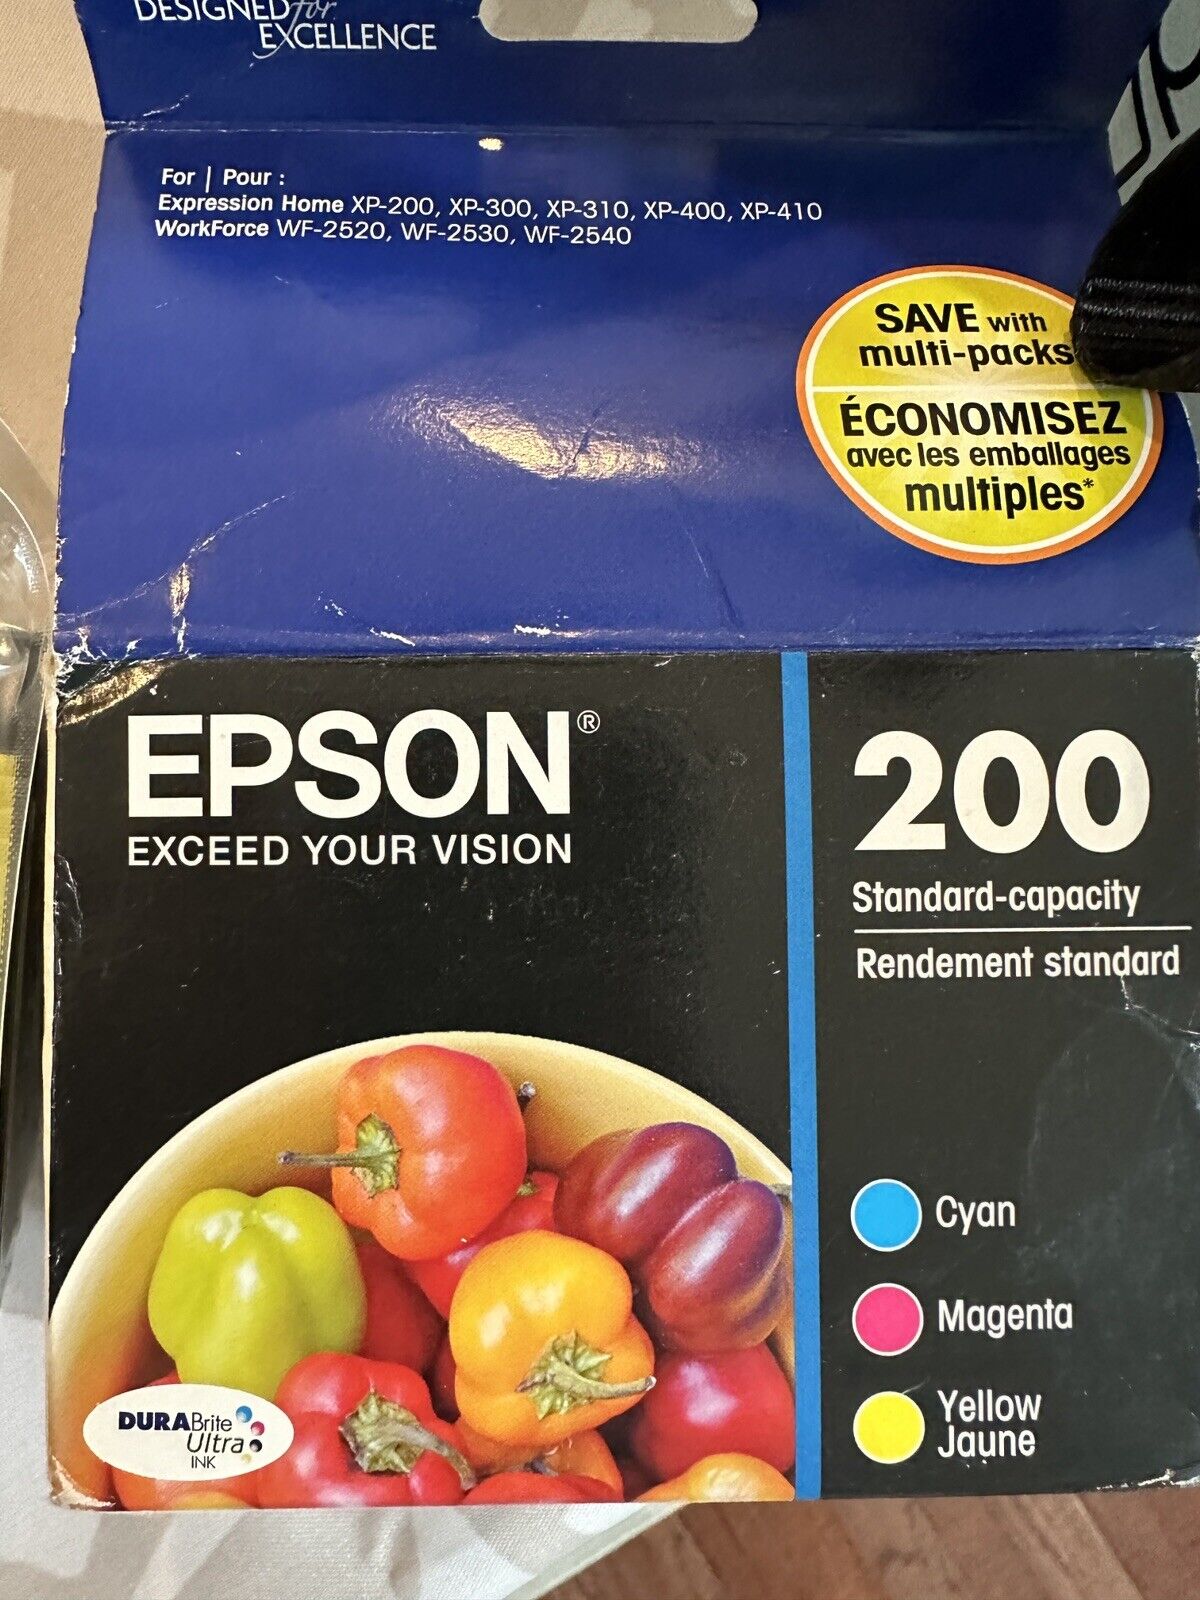 Epson 200 Color Ink Cartridge - Cyan, Magenta, Yellow Exp 6/2017